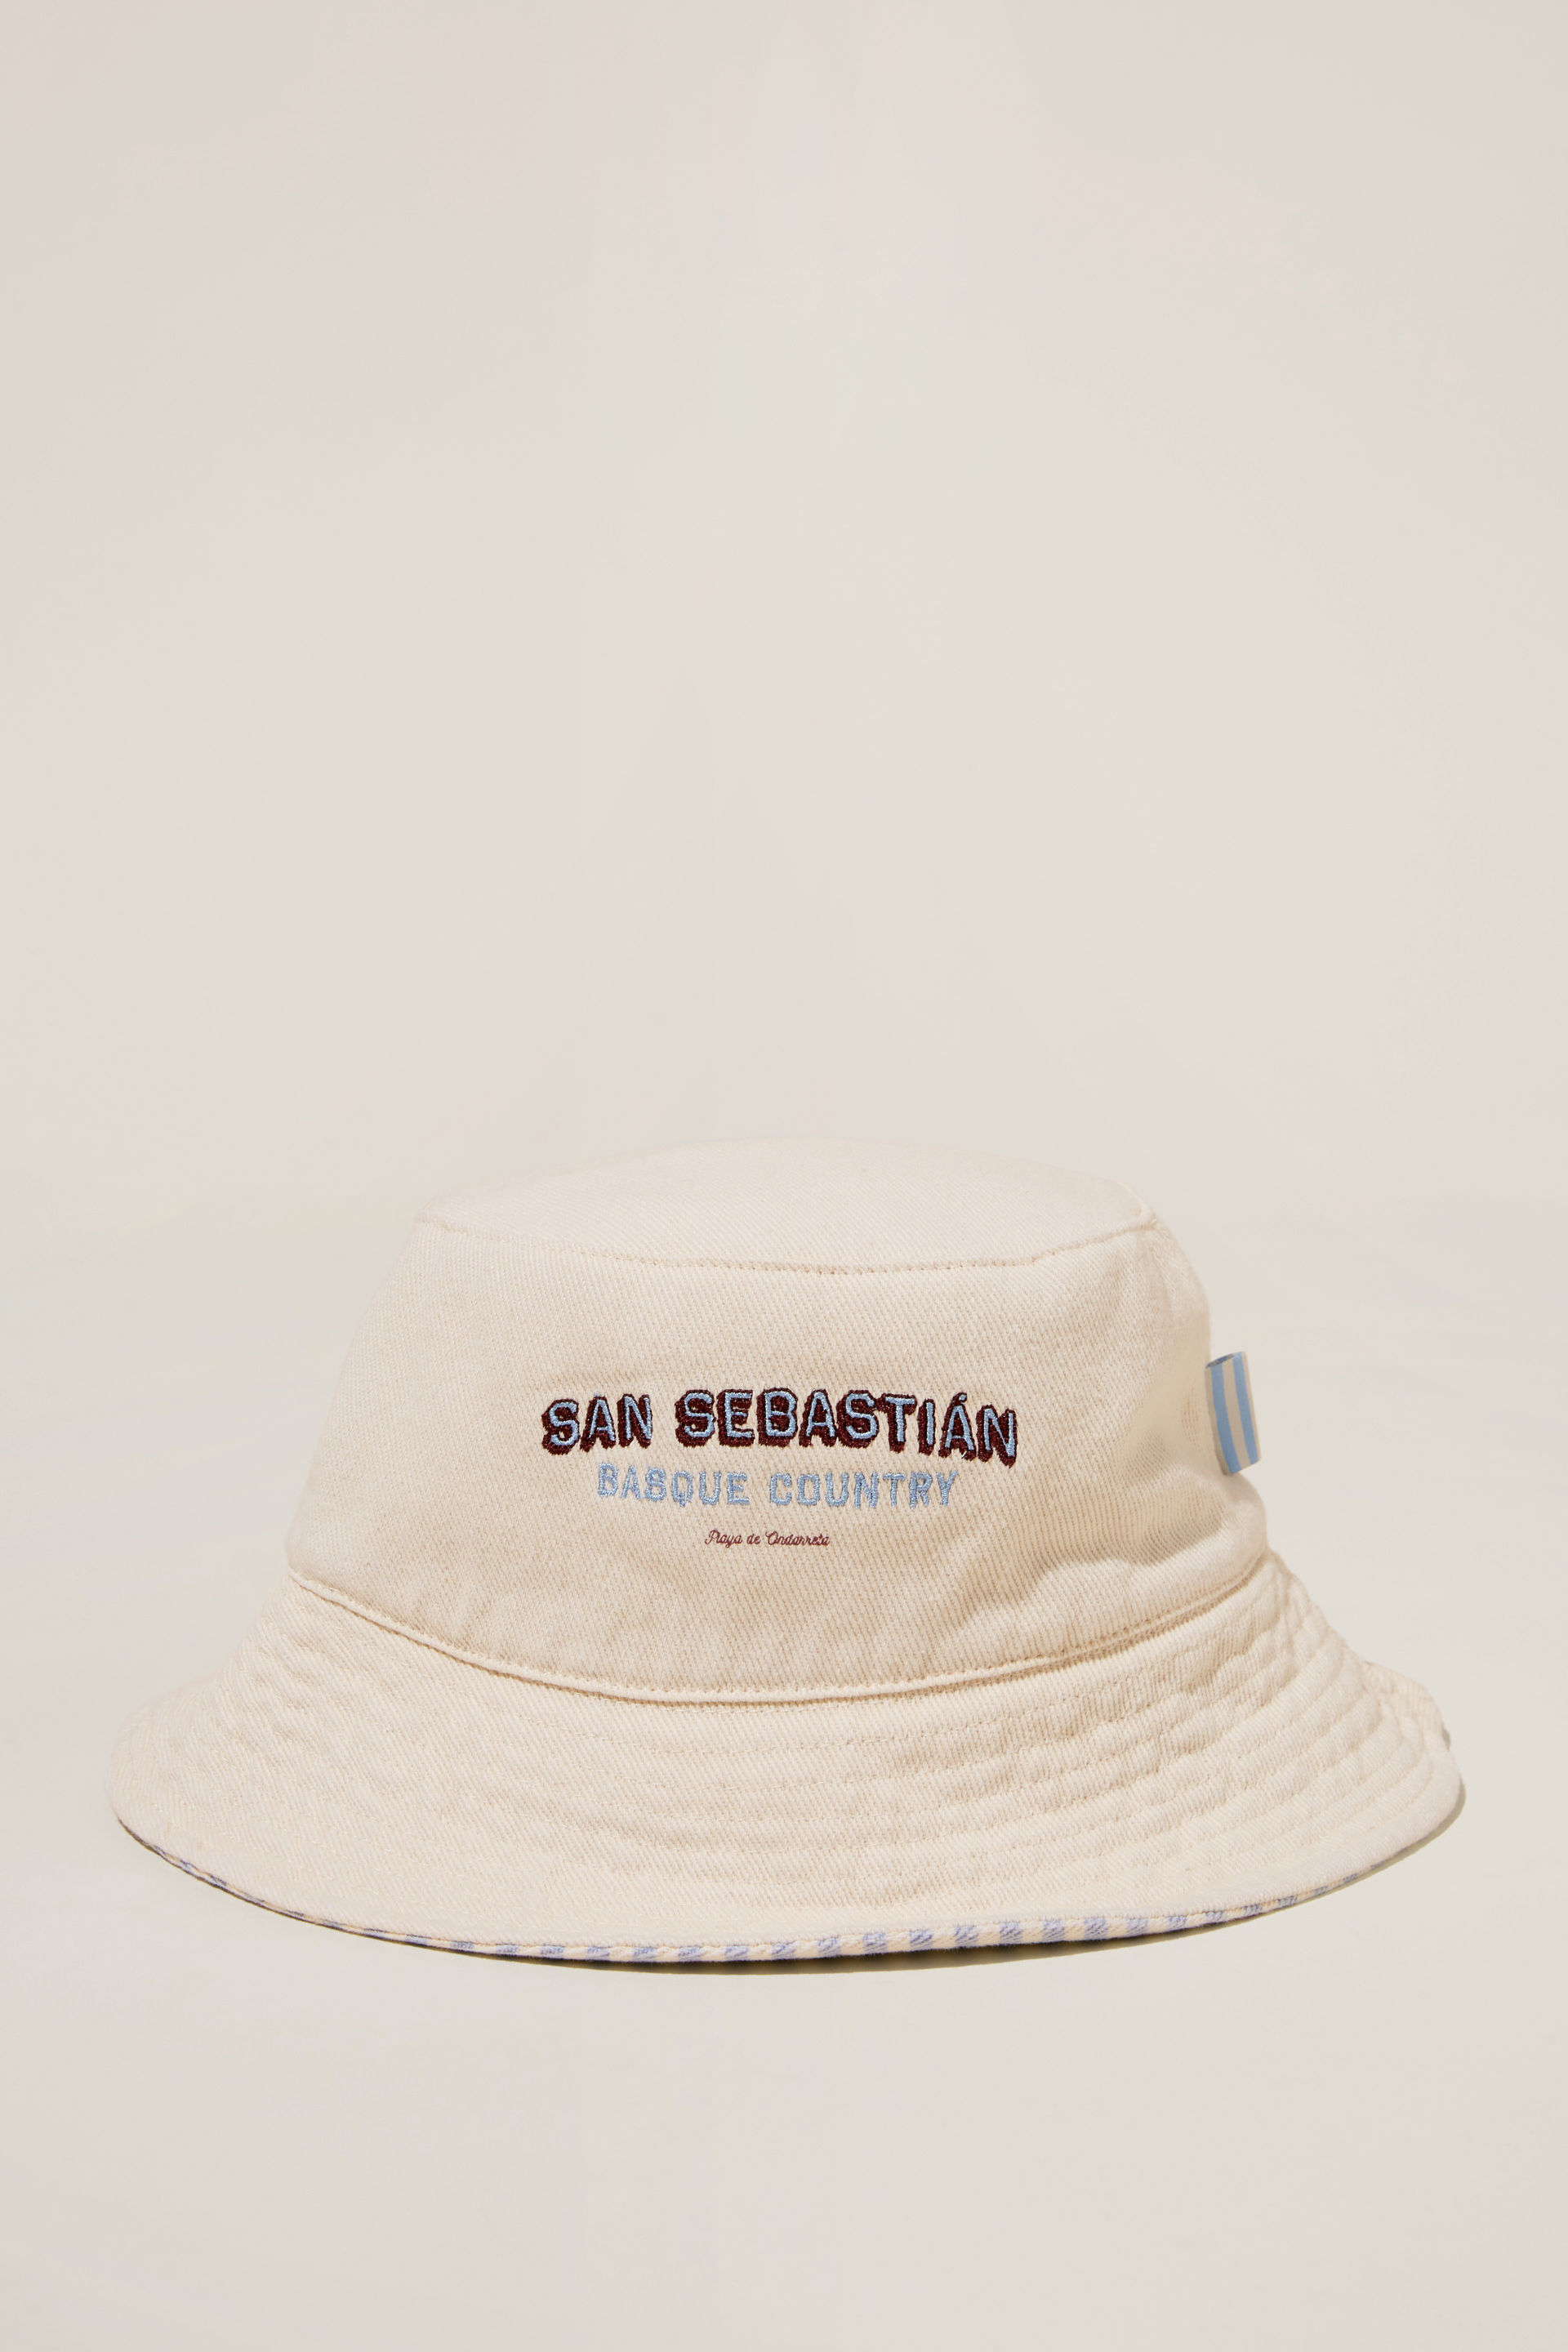 Rubi - Reversible Bianca Bucket Hat - San sebastian/ecru blue stripe